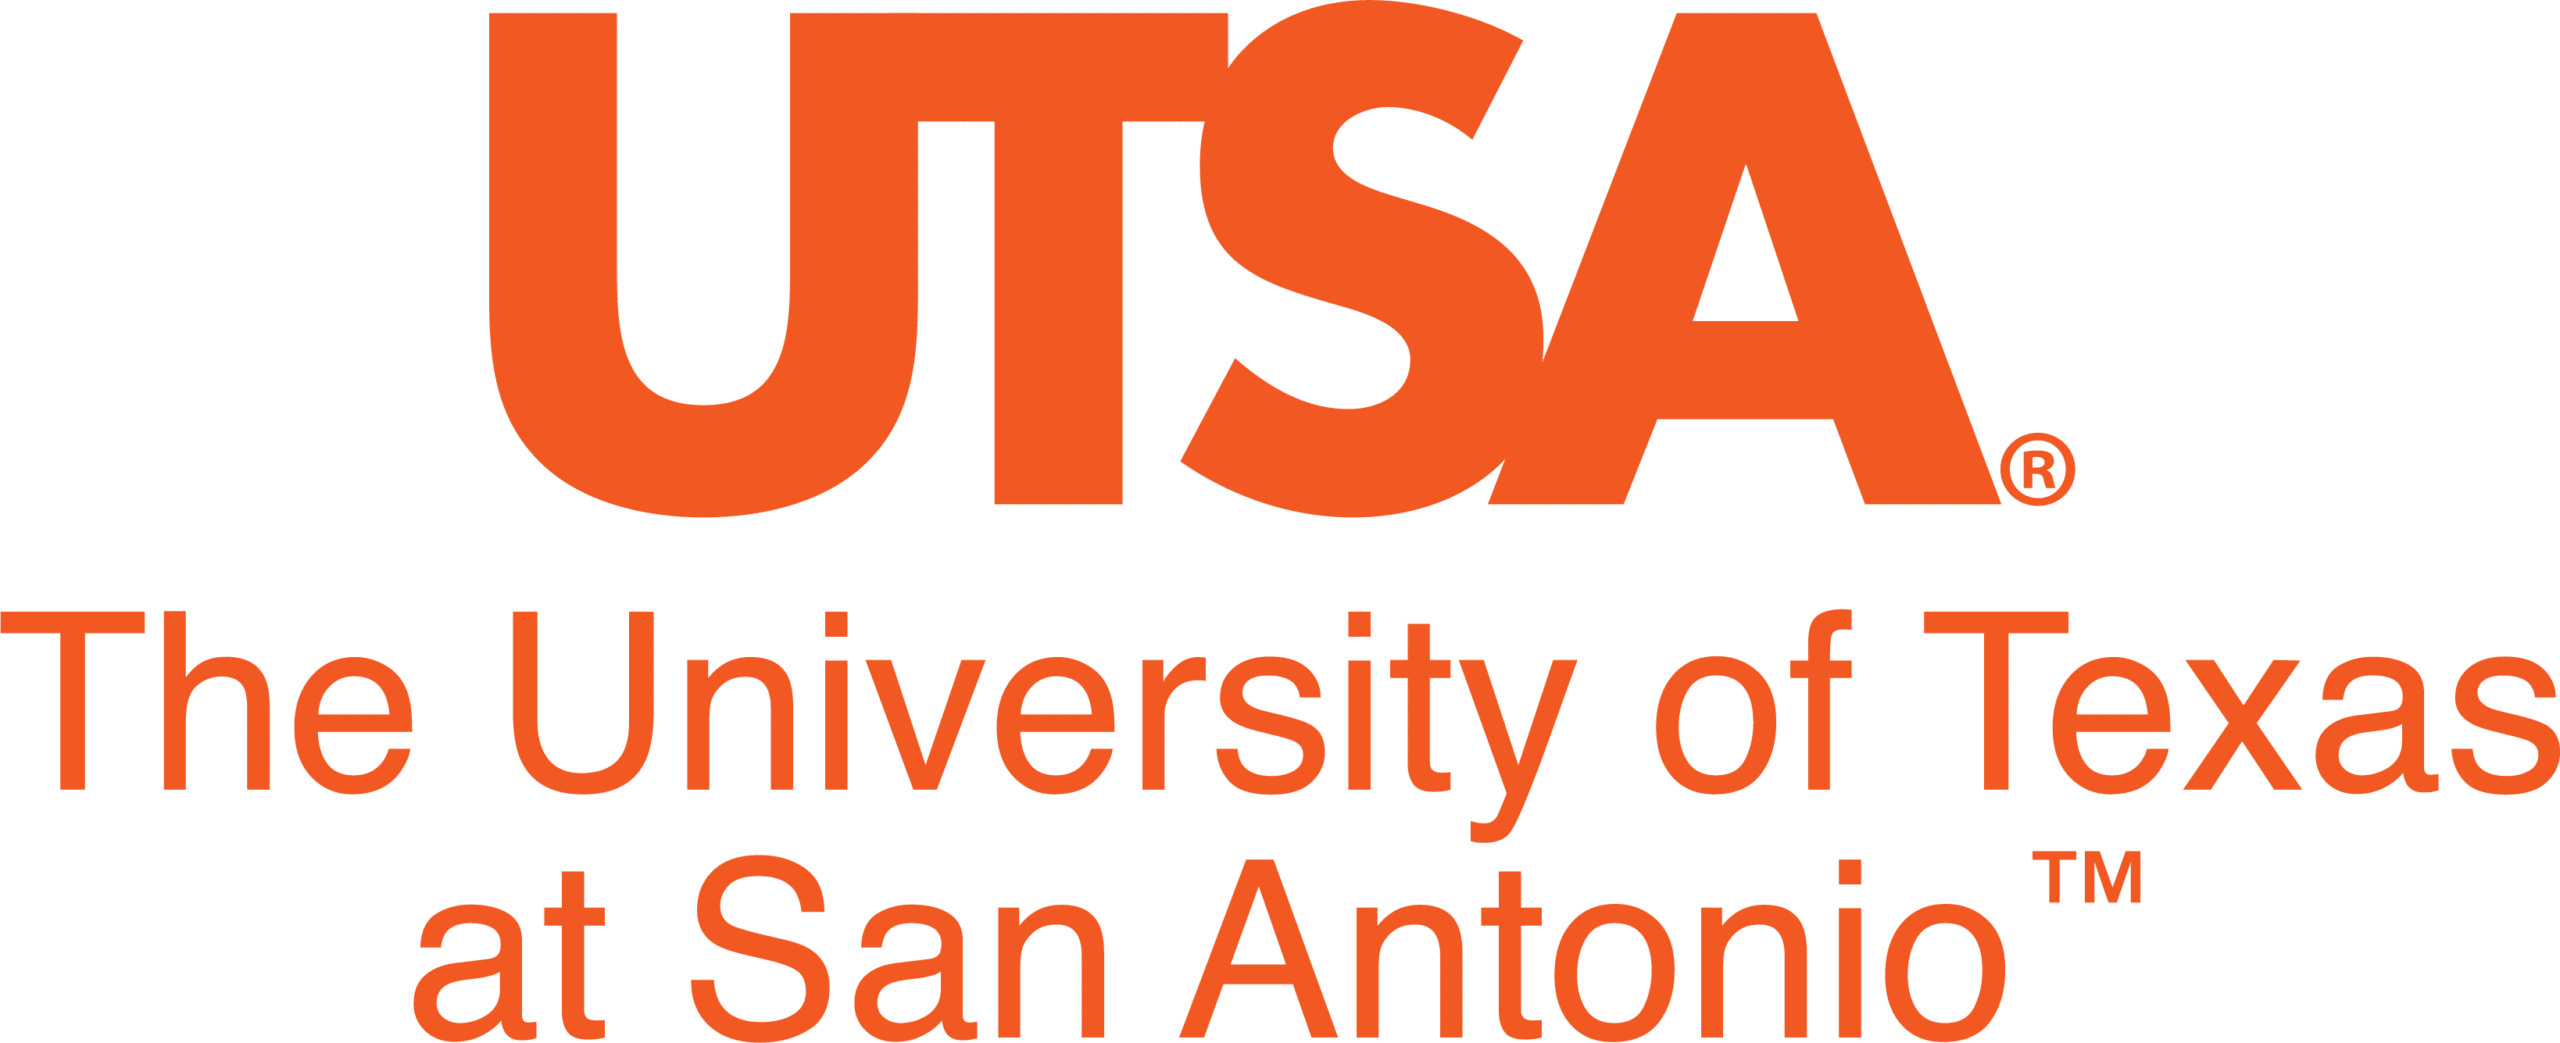 utsa-logo-stacked_orange